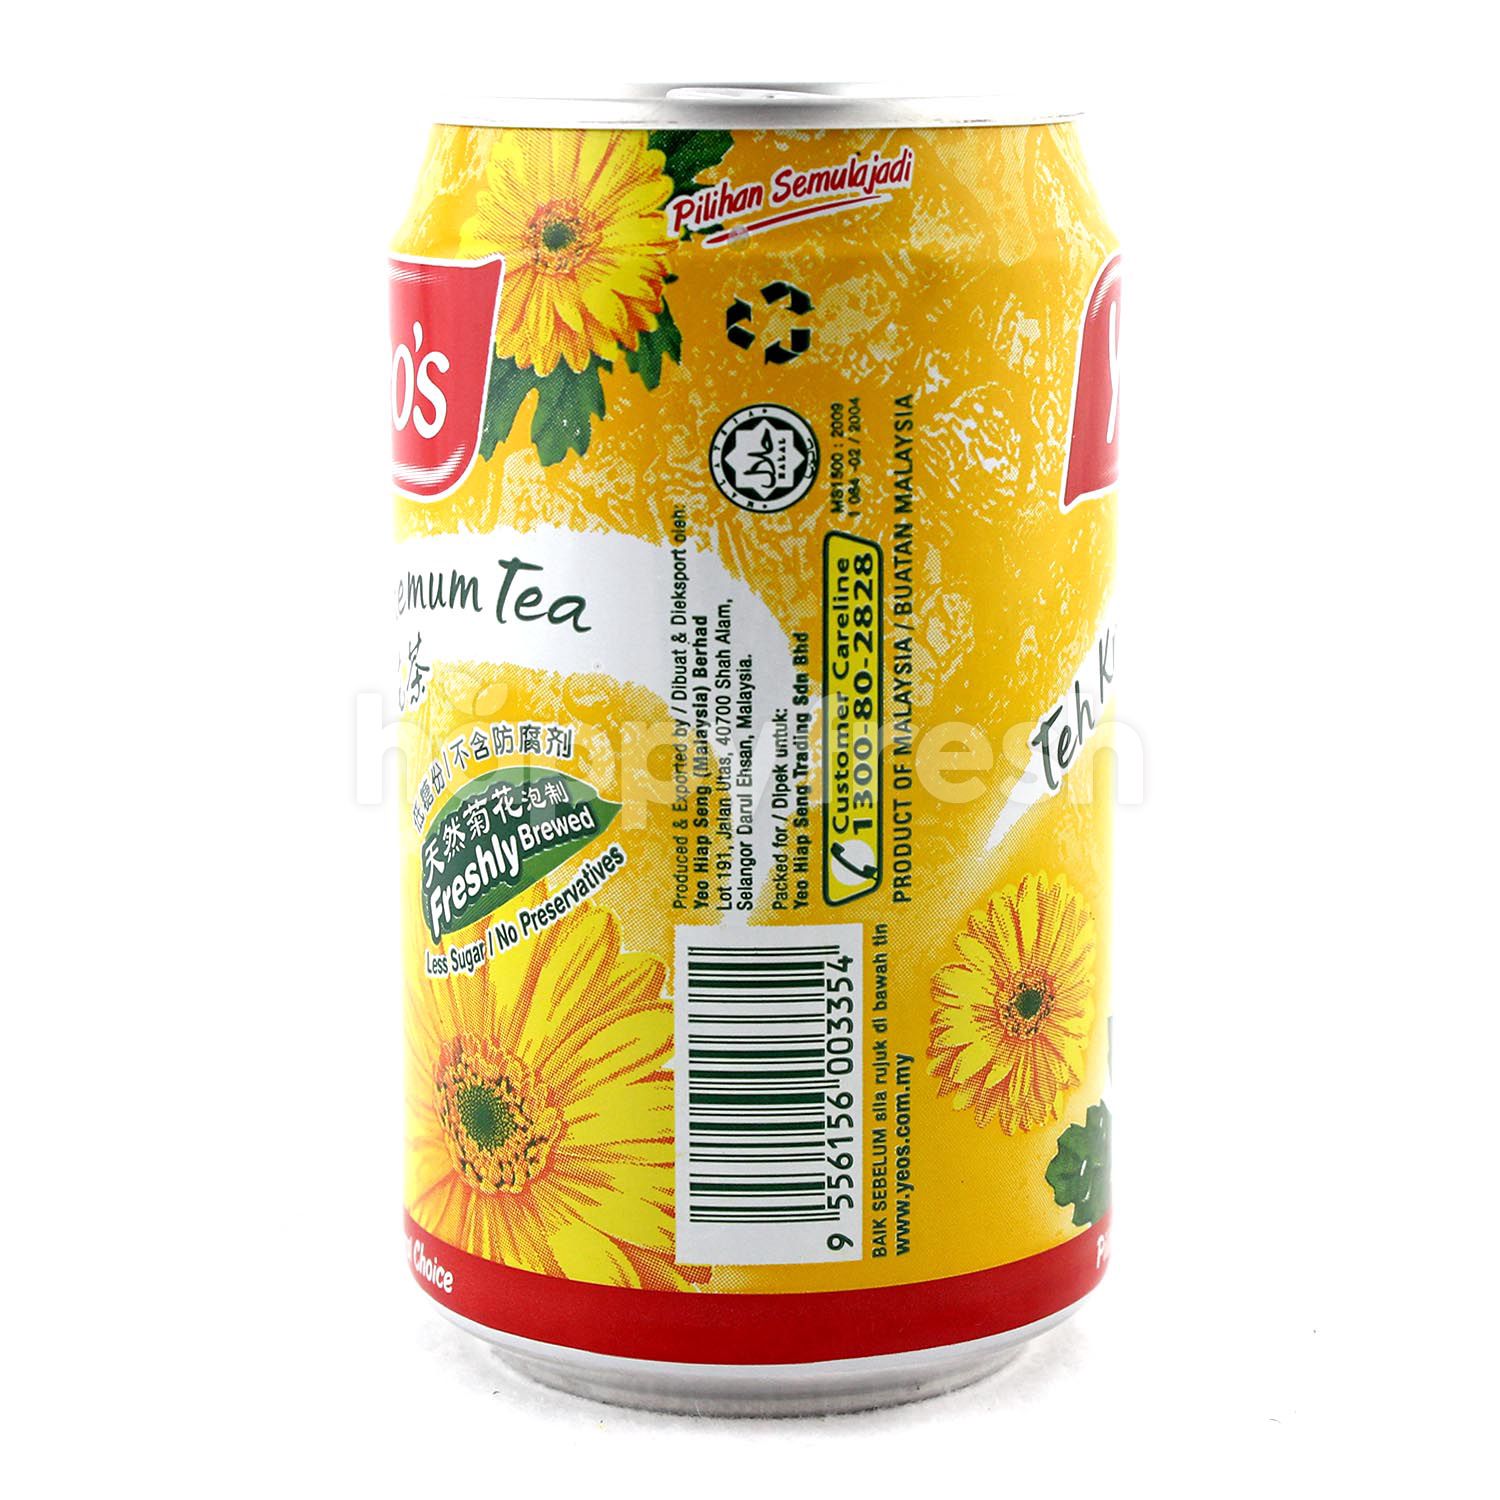 Buy Yeo S Chrysanthemum Tea Drinks At Urbanfresh Marketplace Happyfresh Shah Alam